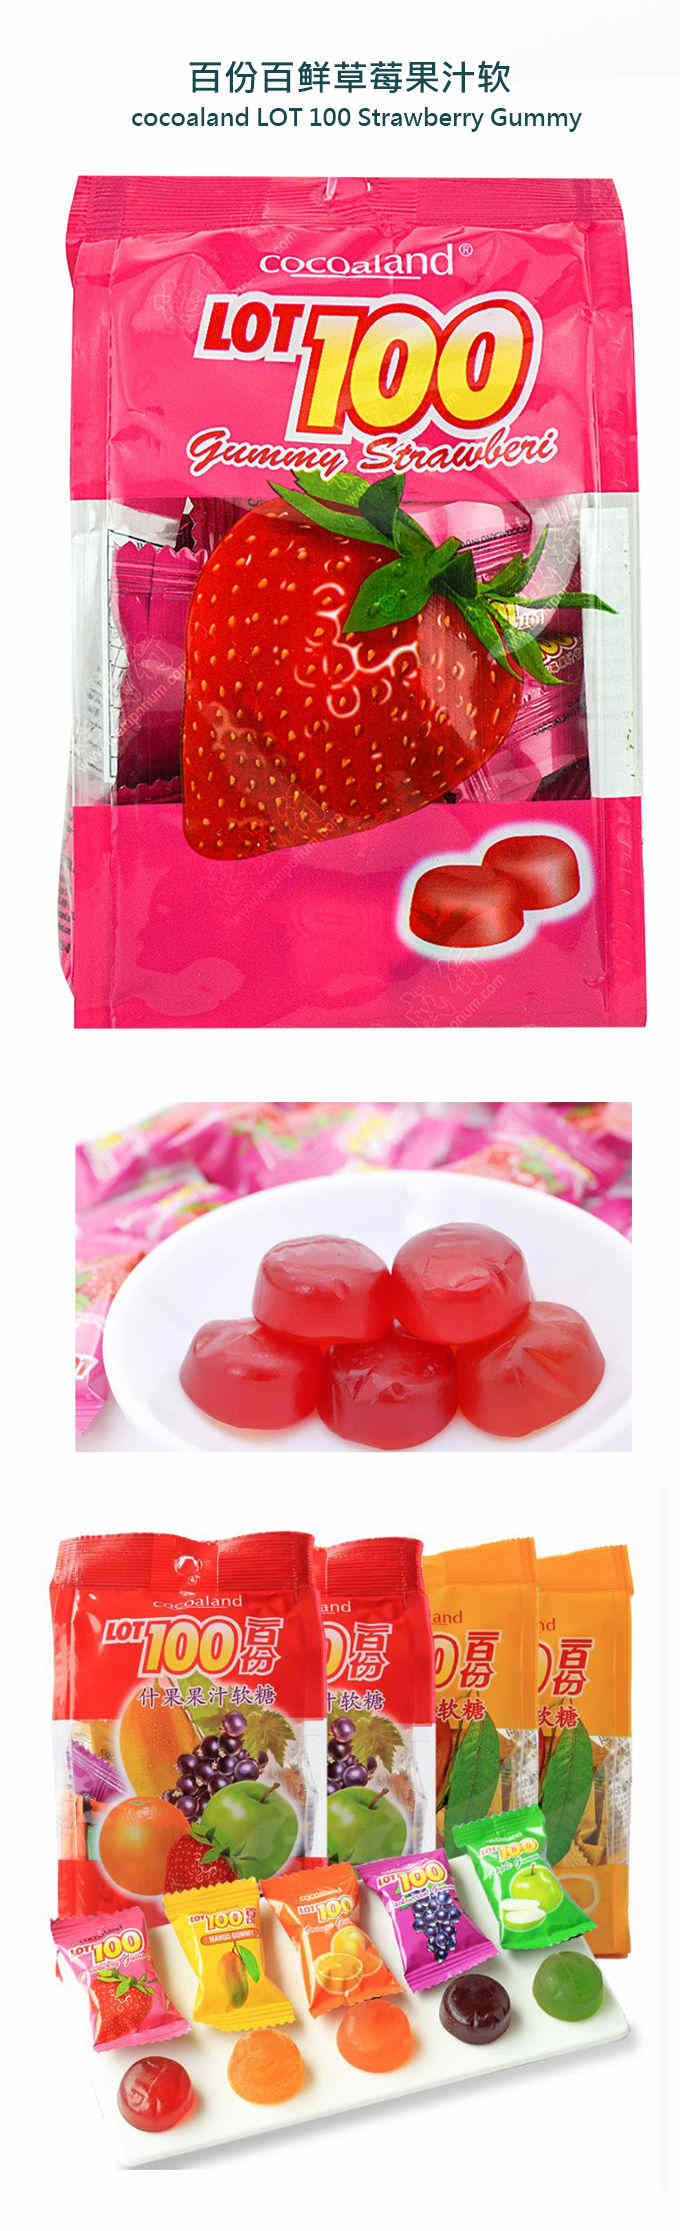 Cocoaland LOT 100 Strawberry Gummy 150g - Tak Shing Hong